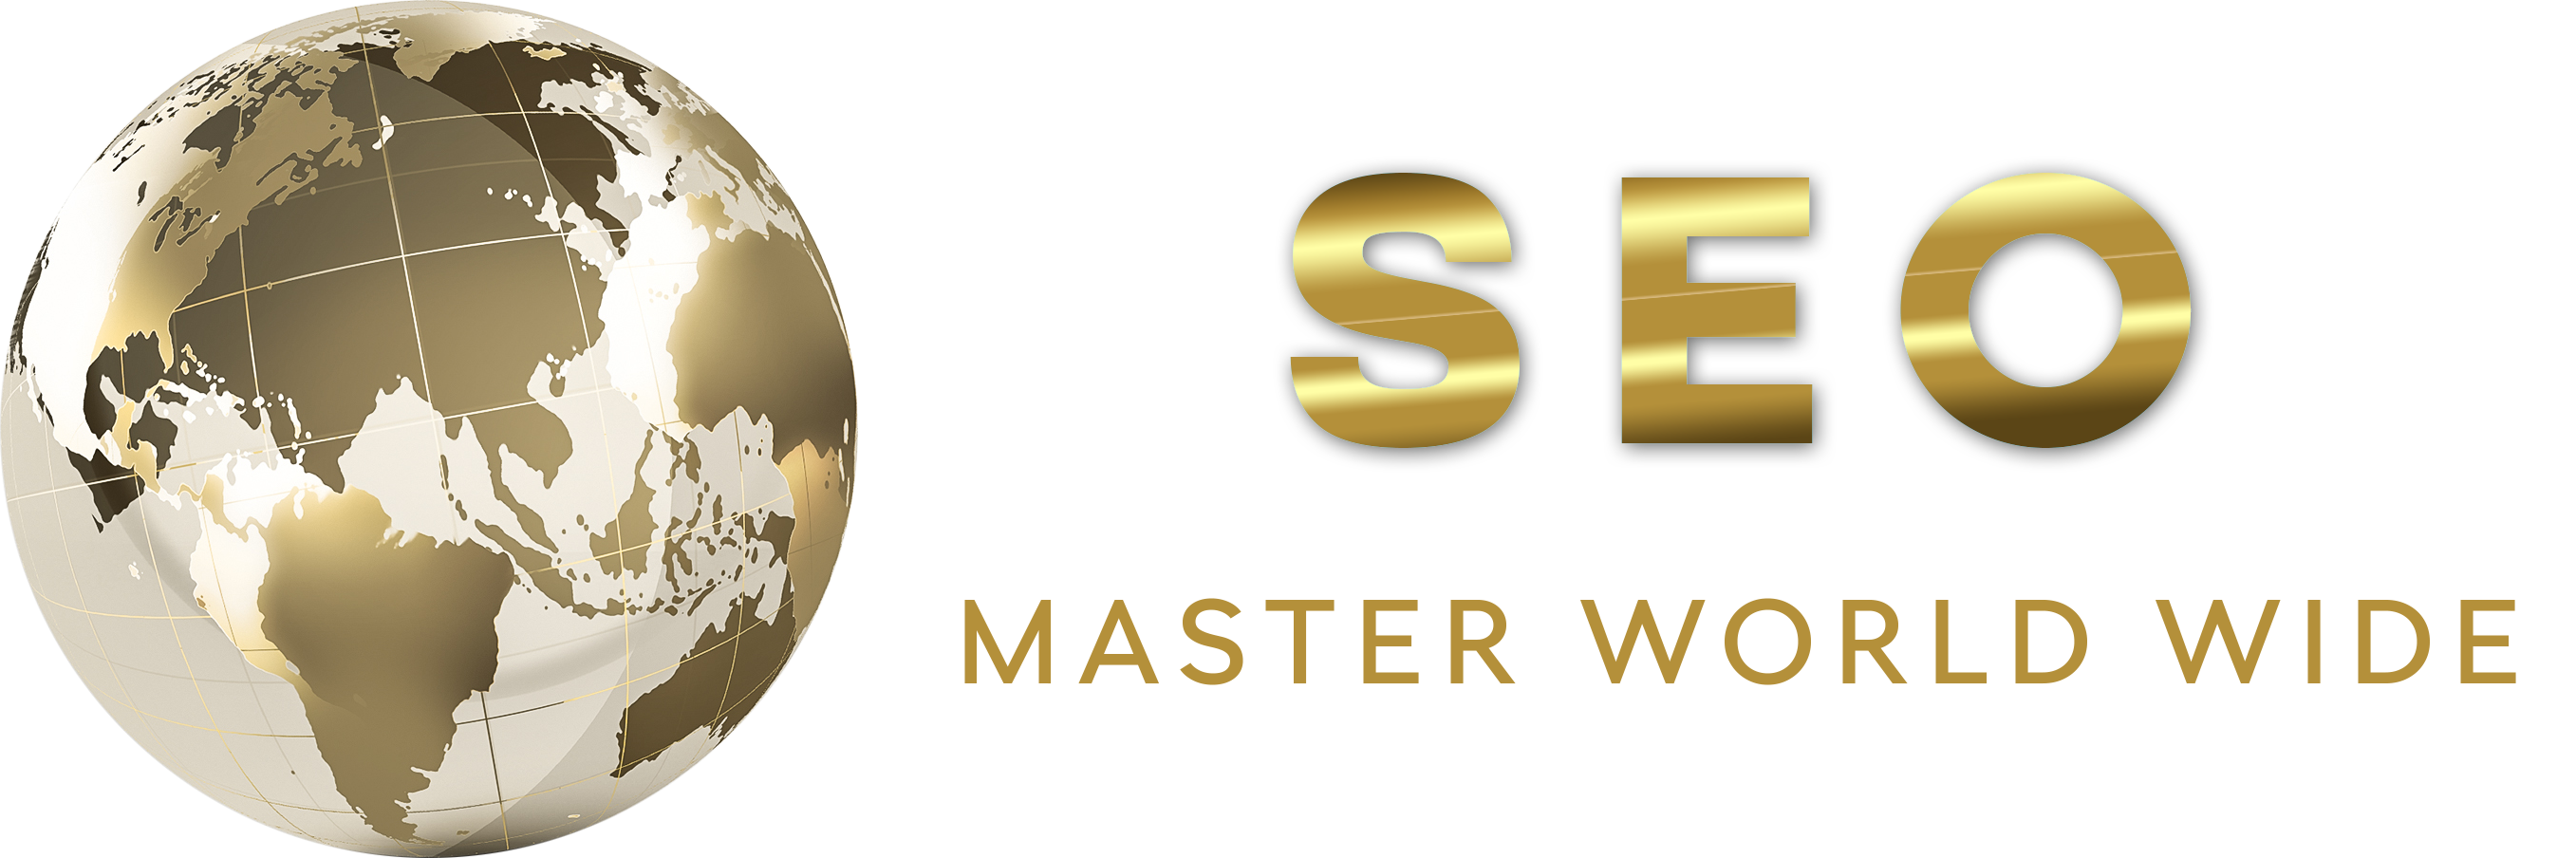 SEO Master World Wide - SEO Services logo